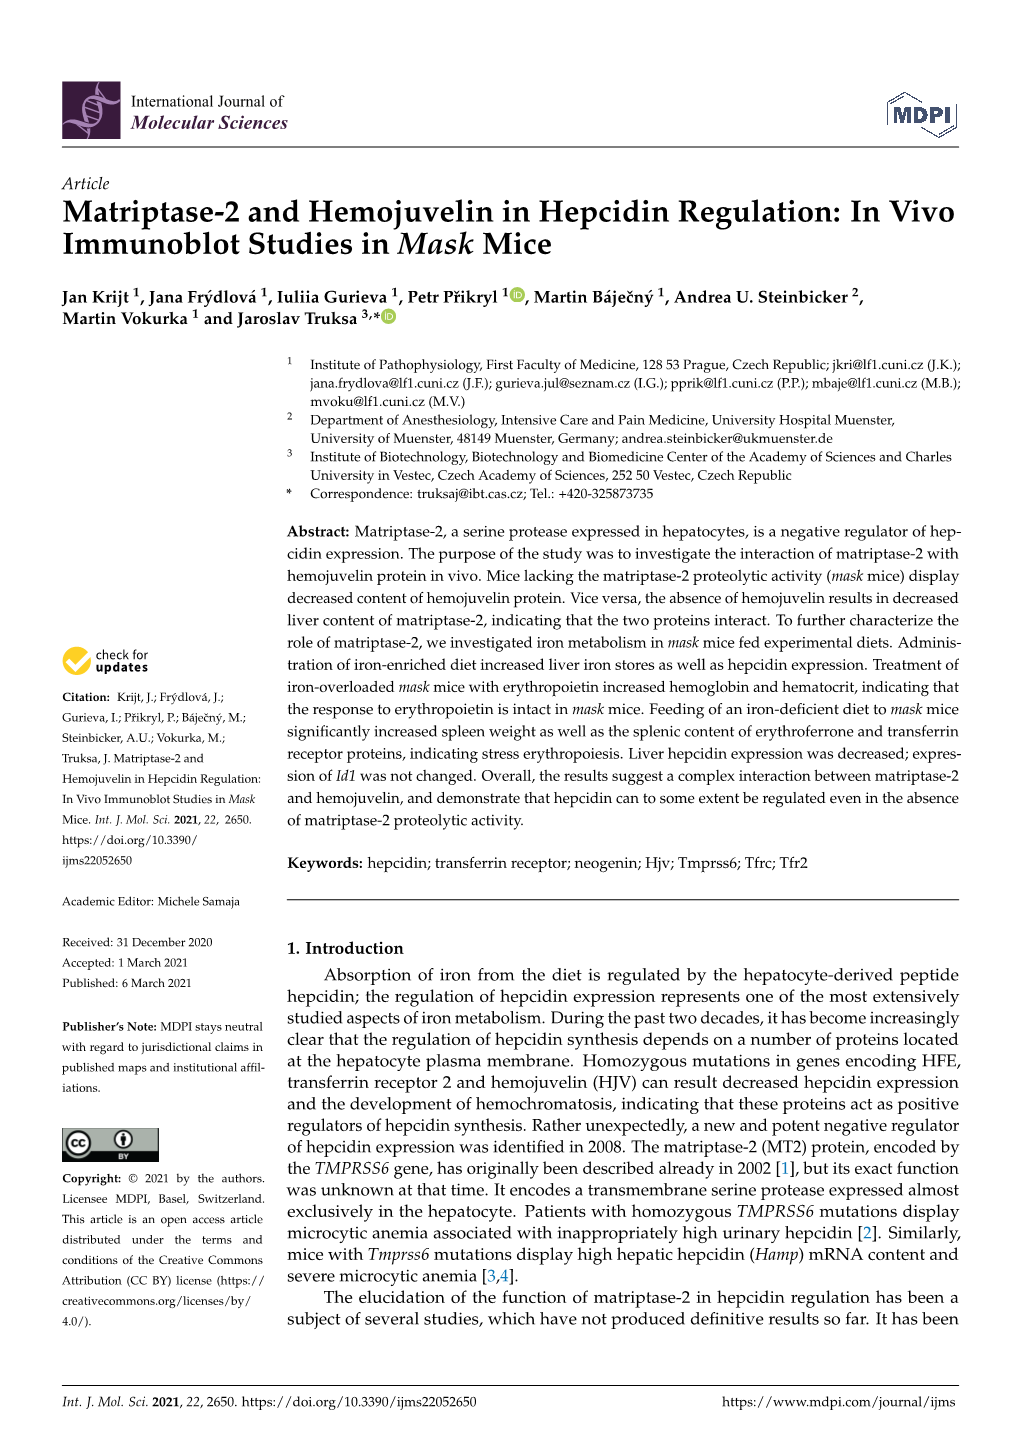 Matriptase-2 and Hemojuvelin in Hepcidin Regulation: in Vivo Immunoblot Studies in Mask Mice